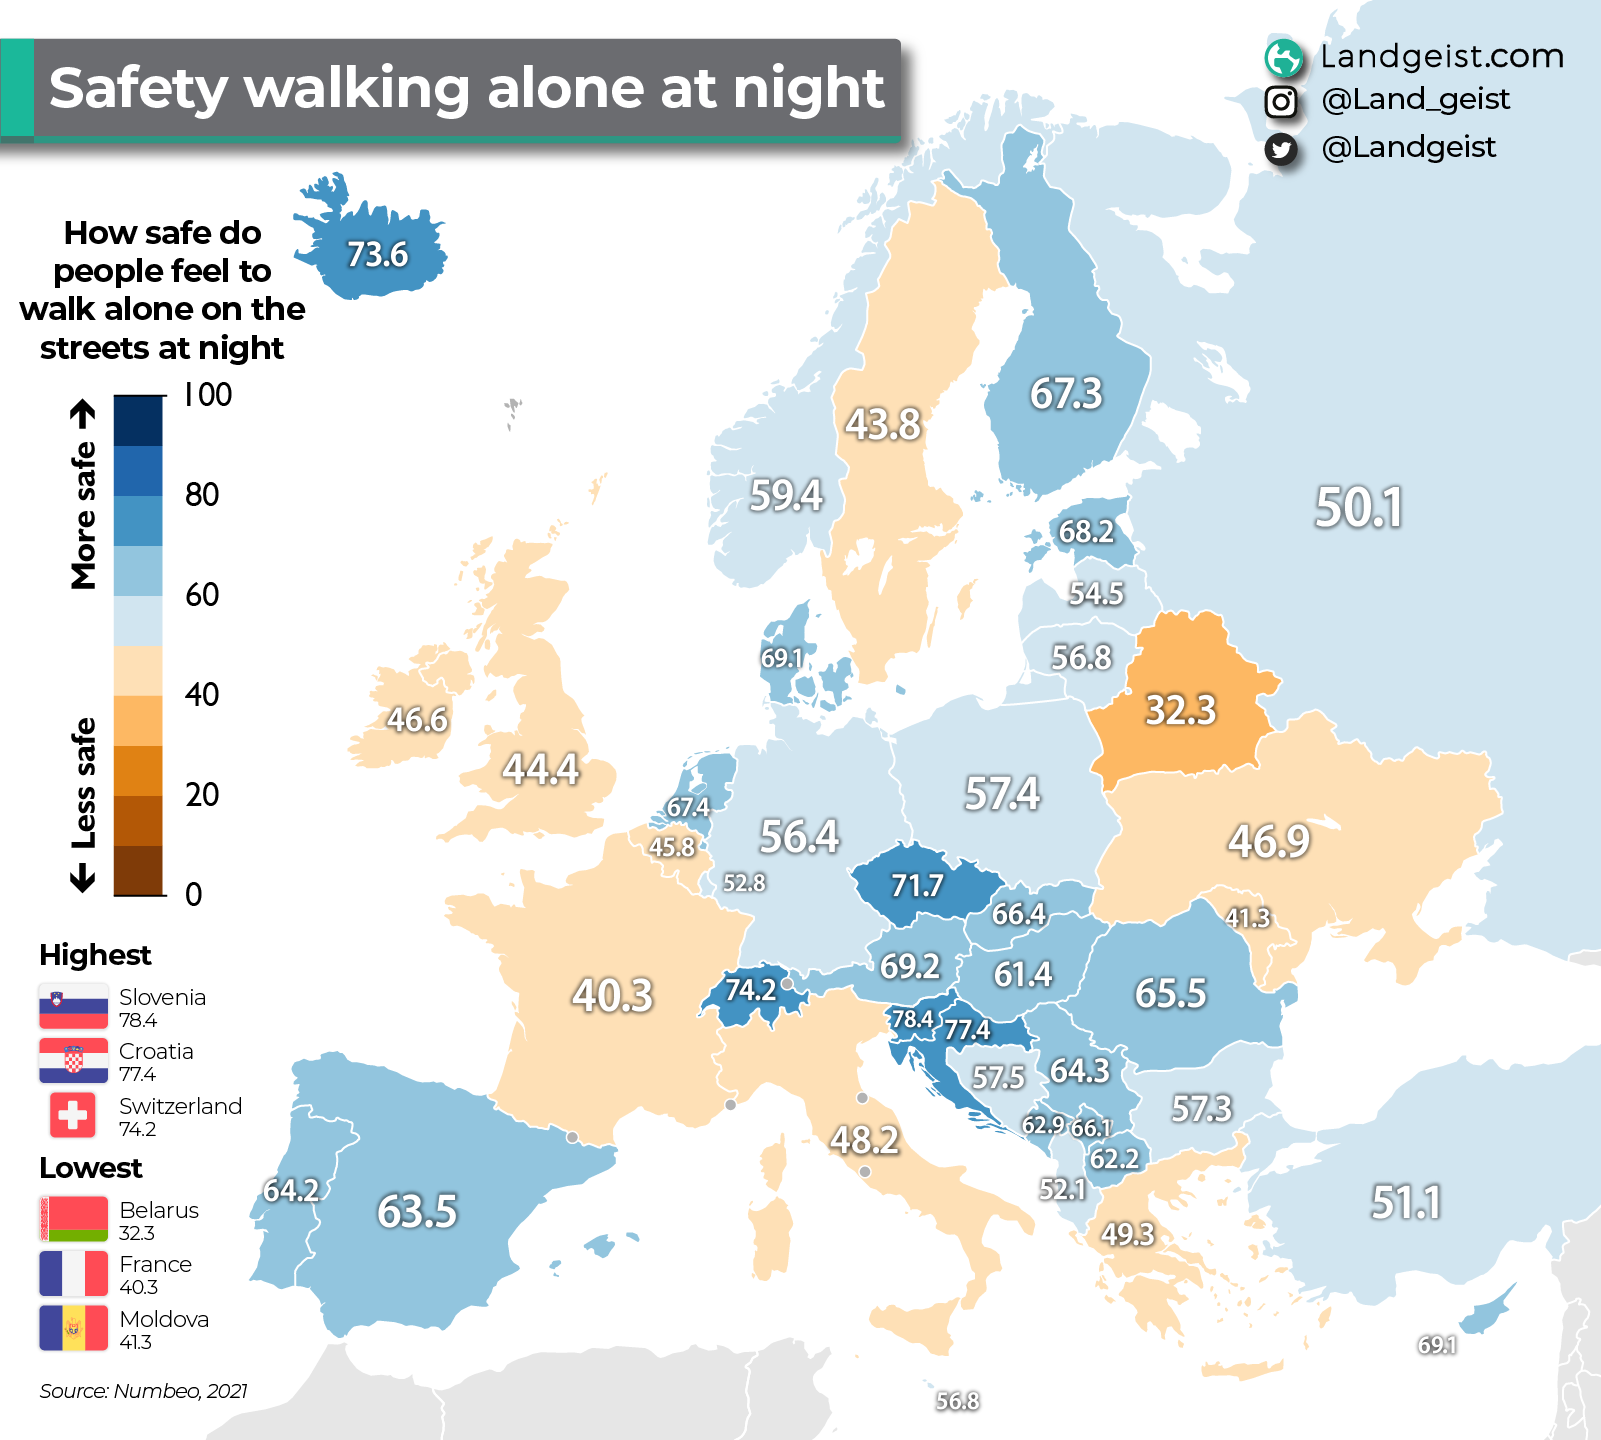 europe-safety-walking-alone-at-night-1.png